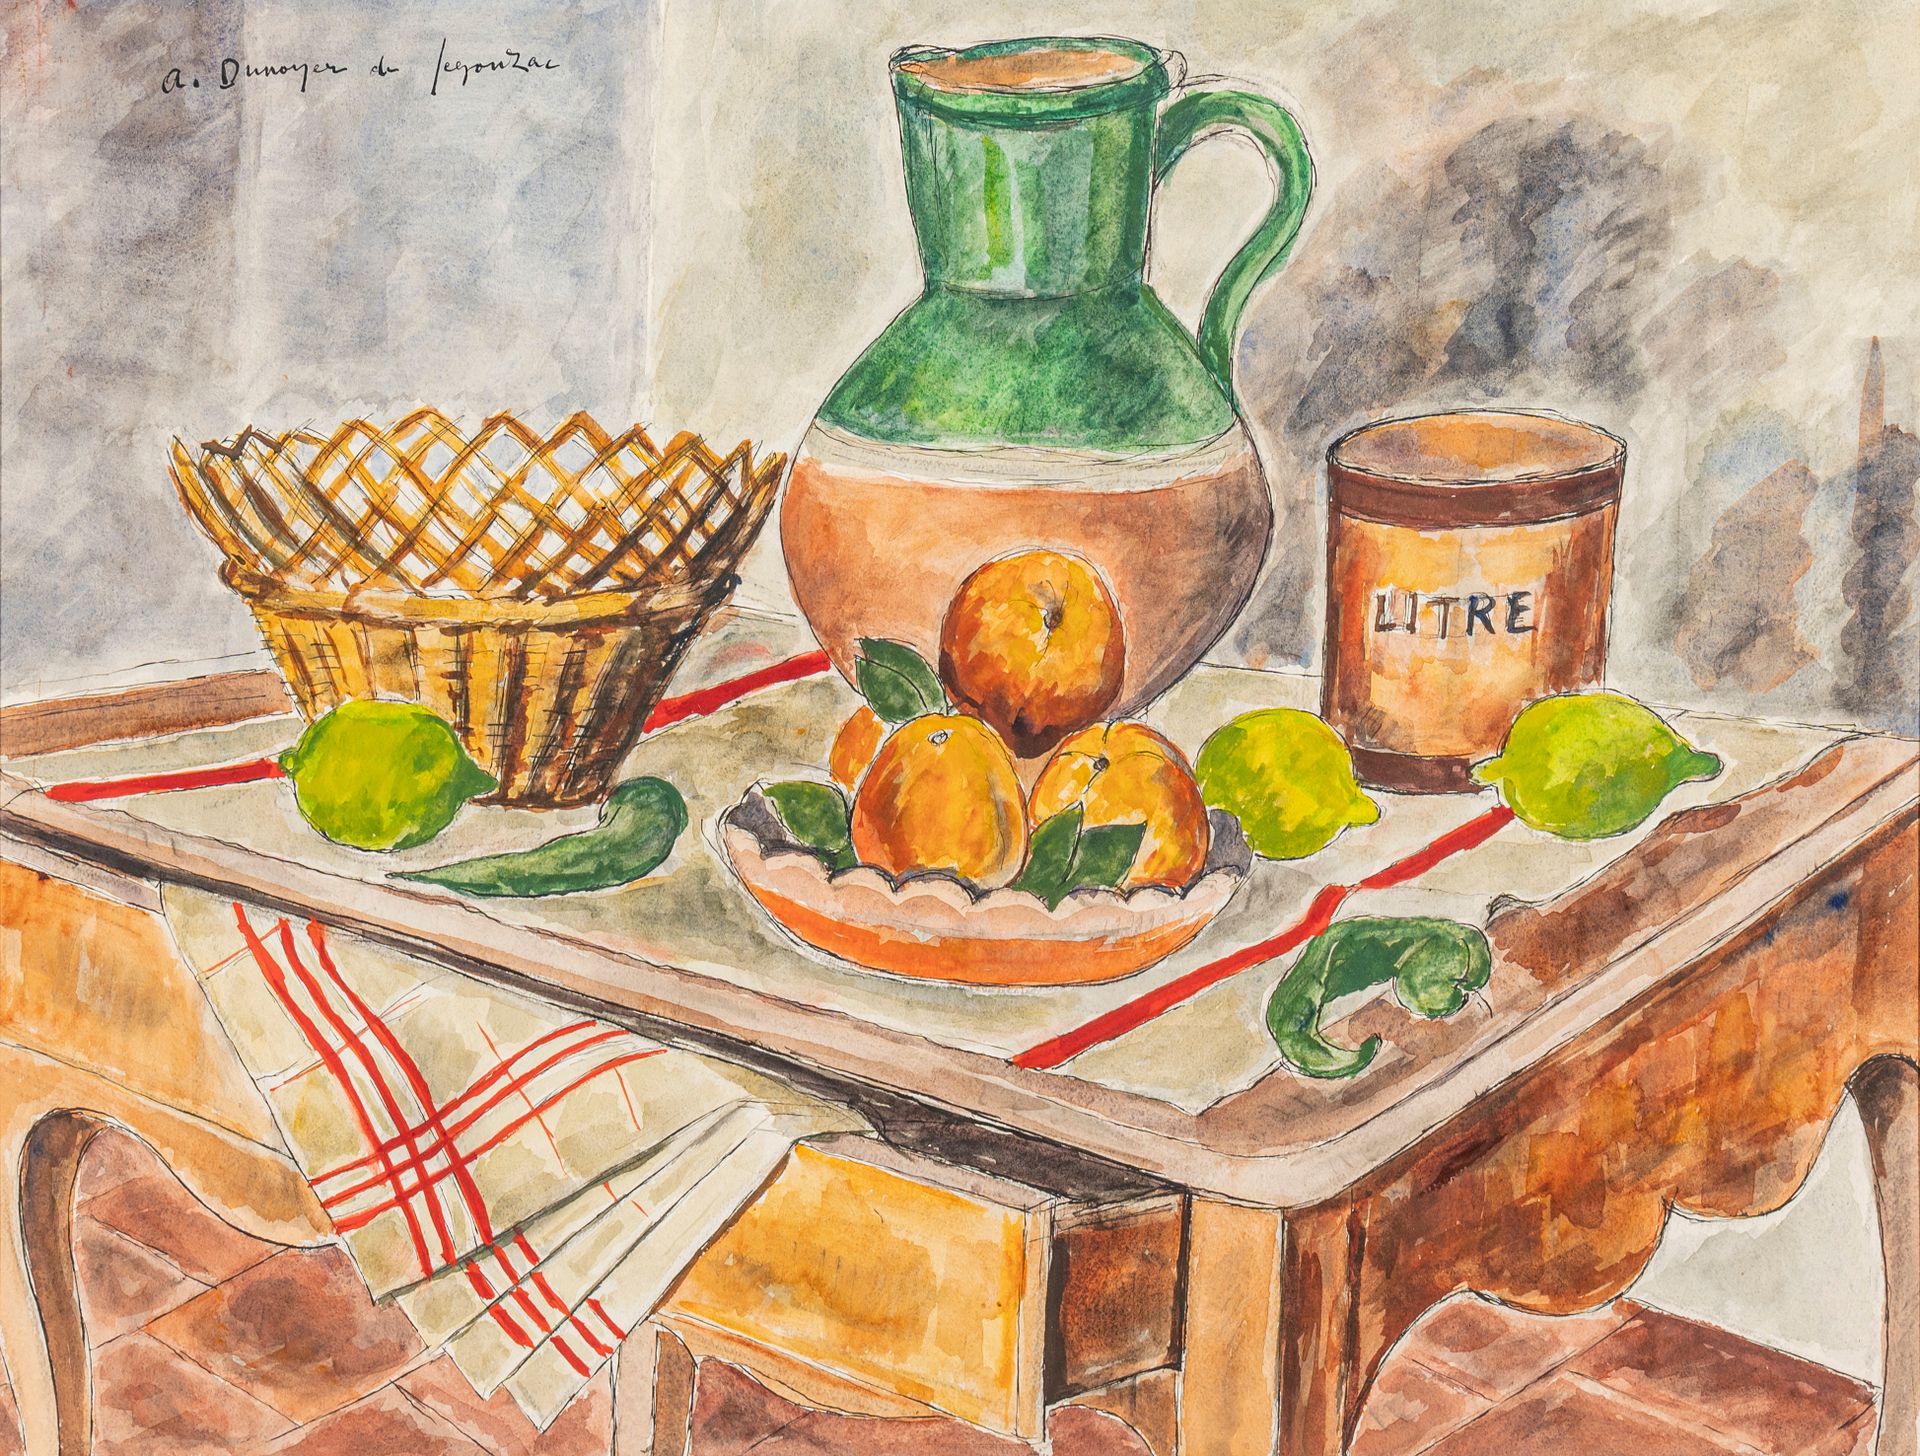 André DUNOYER DE SEGONZAC (1884-1974) 安德烈-杜诺耶-德塞贡扎克(1884-1974)

苹果和柠檬的静物画

纸上水彩和&hellip;